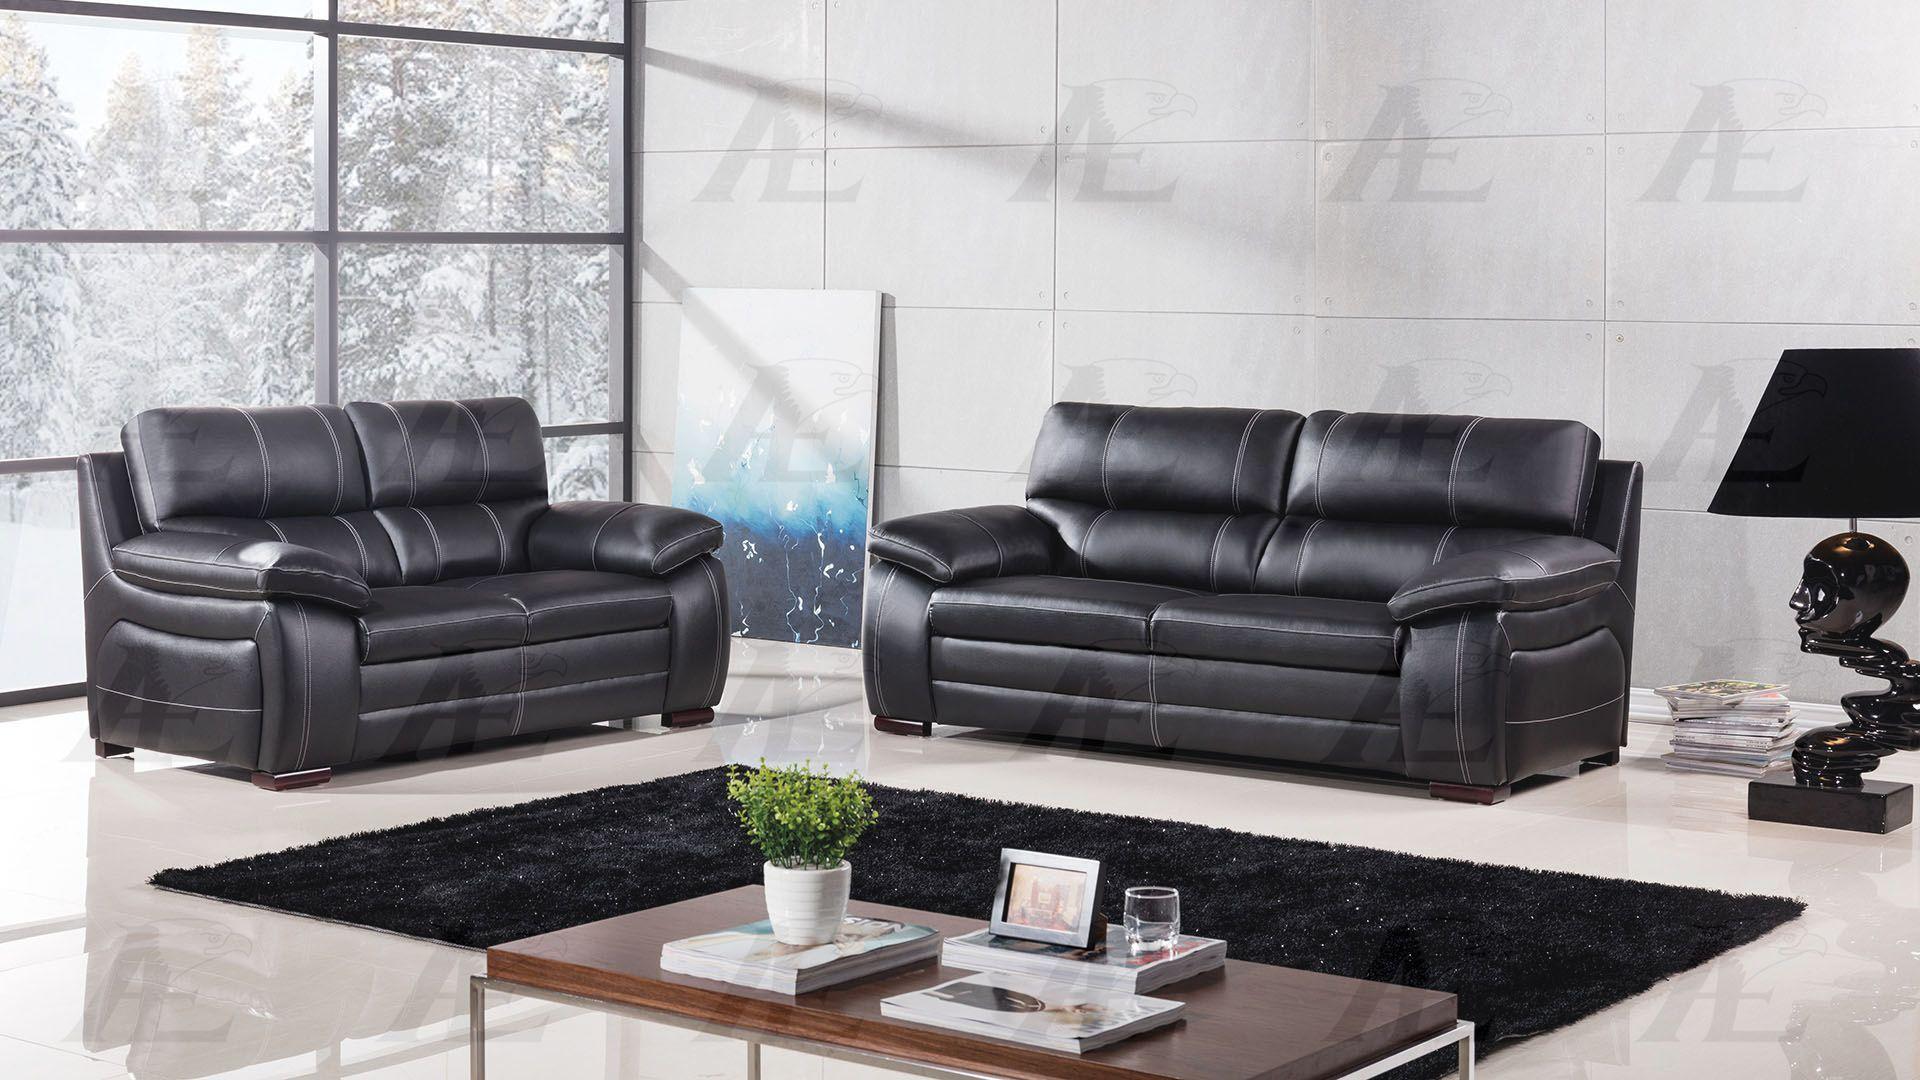 

    
American Eagle EK-B520 Black Genuine Leather Living Room Sofa Set 2pcs in Modern Style
